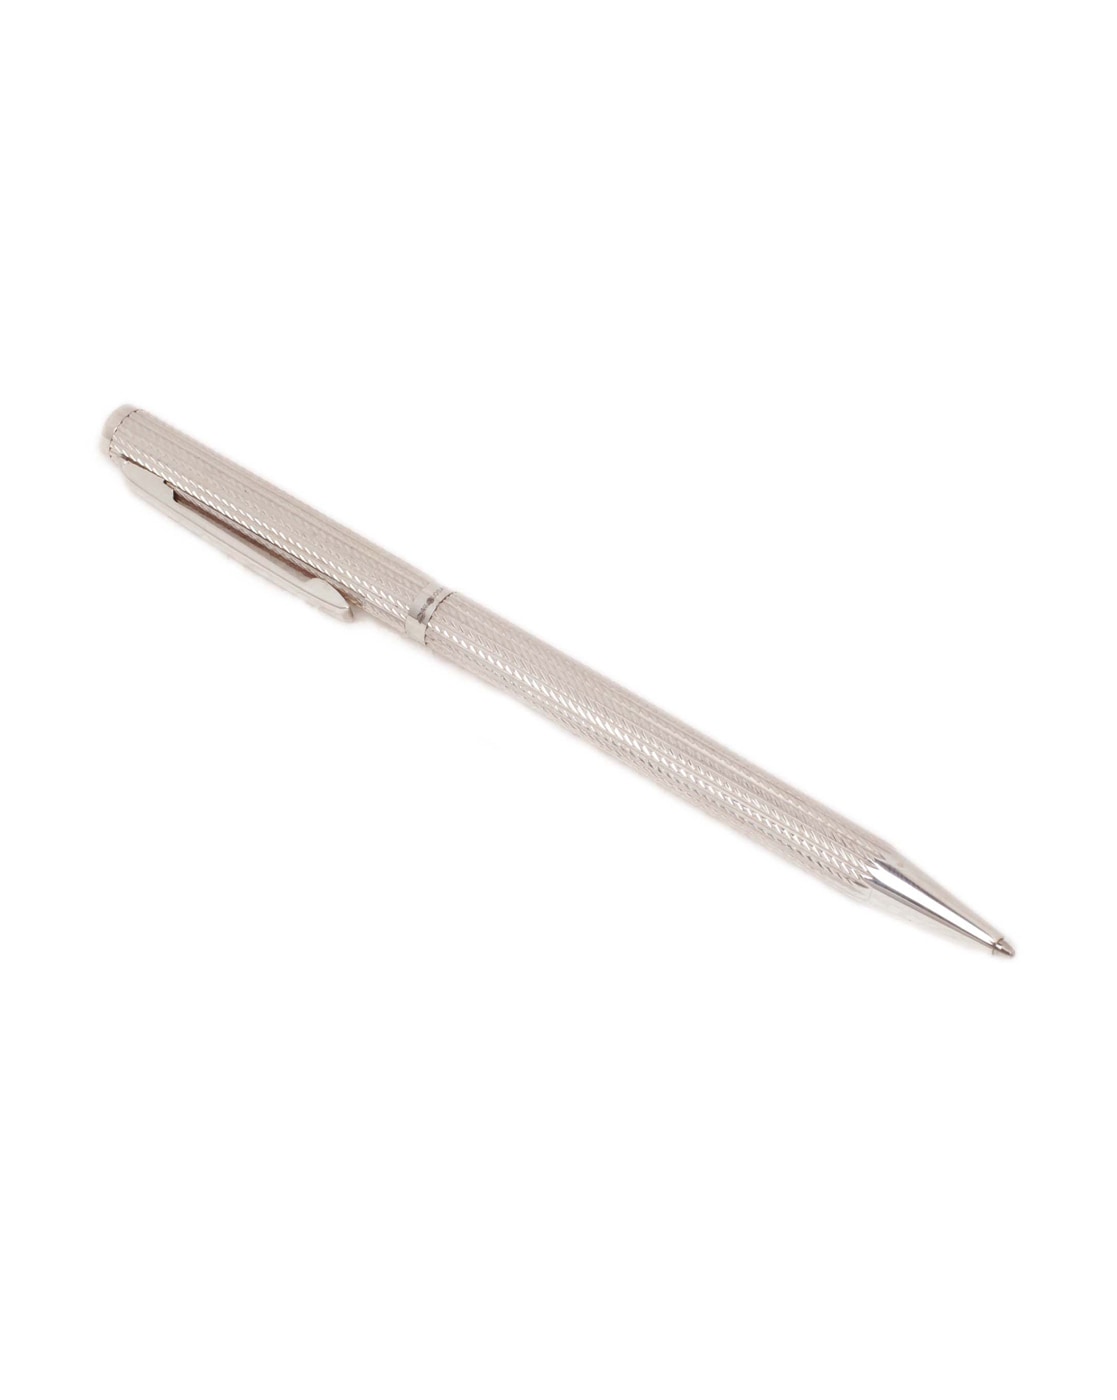 Osasbazaar Osasbazaar Sterling Silver Ballpoint Pen, Silver Pen